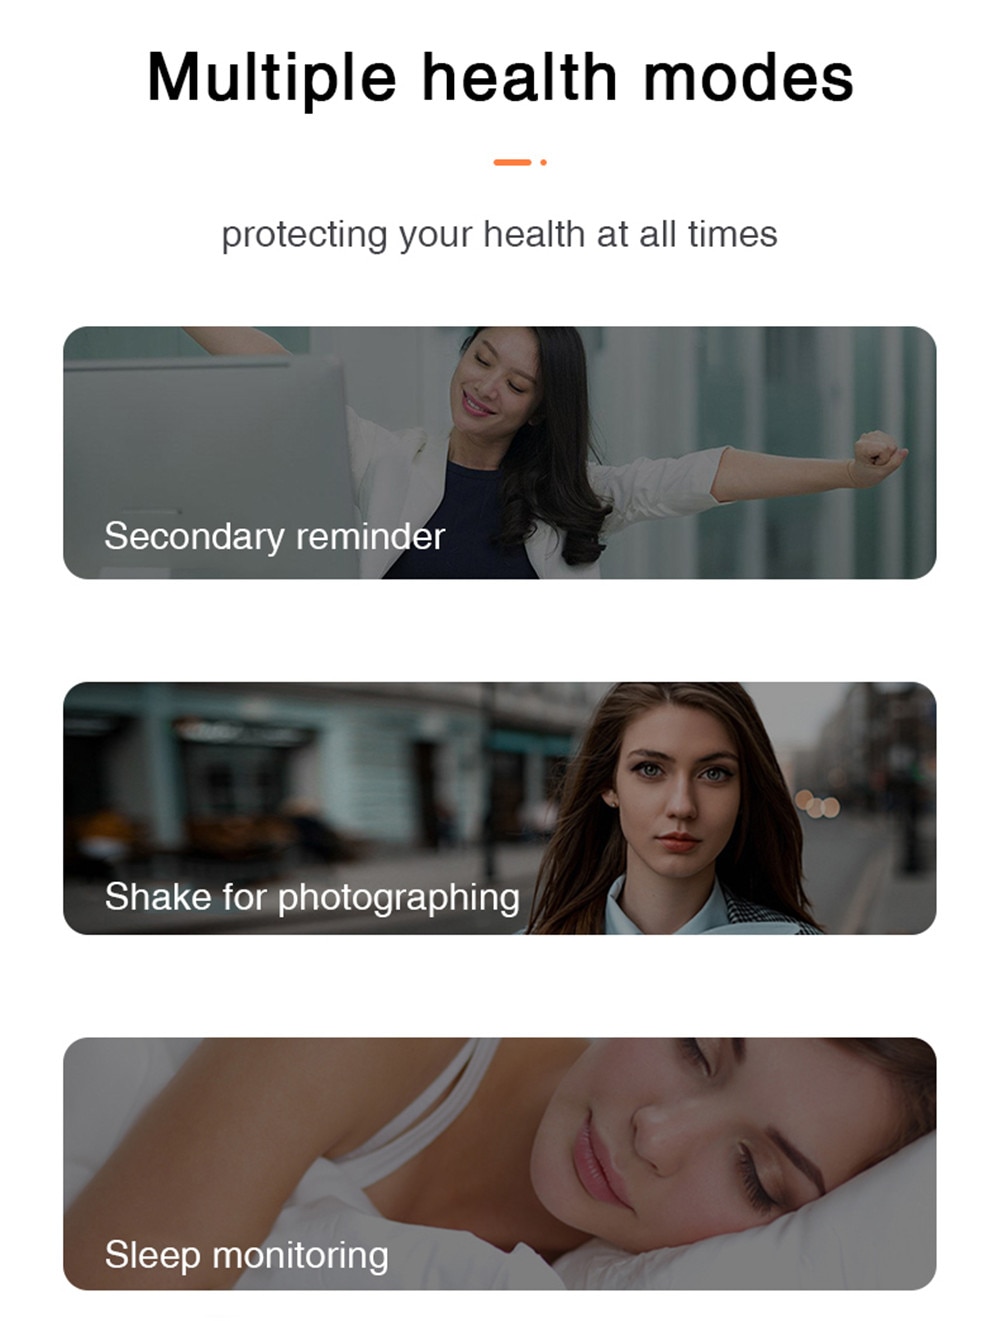 2020 Men Women Smart Watch Waterproof Blood Pressure Smartwatch Heart Rate Monitor Sleep Tracker Clock Watch For Android IOS